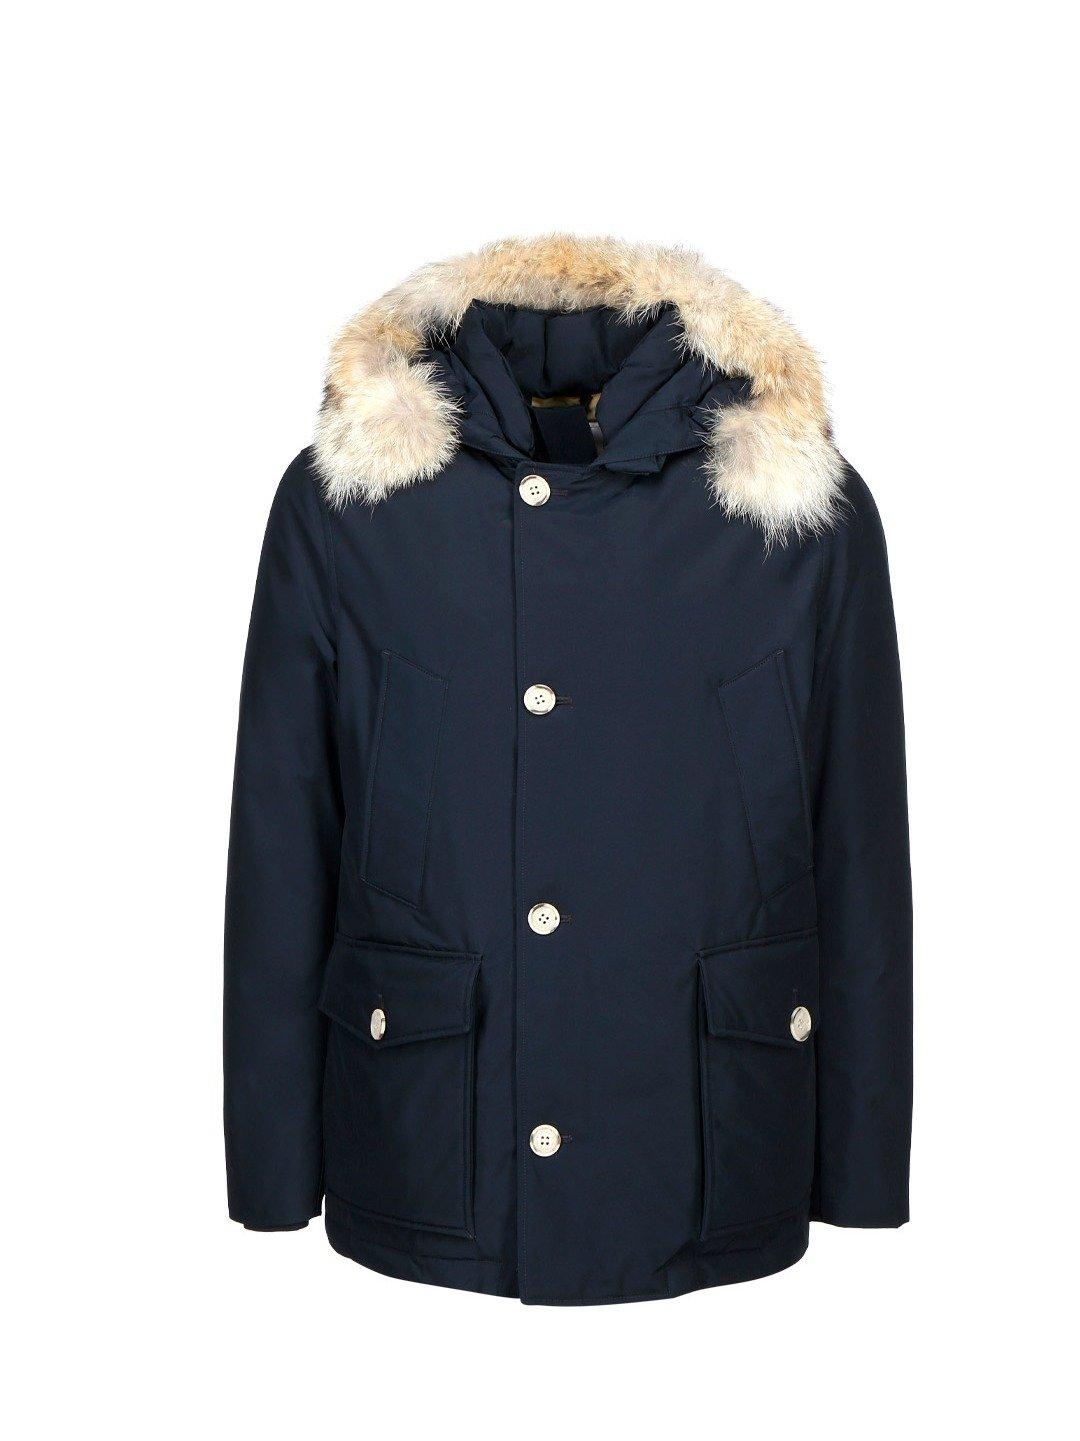 Woolrich Cotton Fur Trim Hooded Arctic Coat in Blue for Men - Lyst